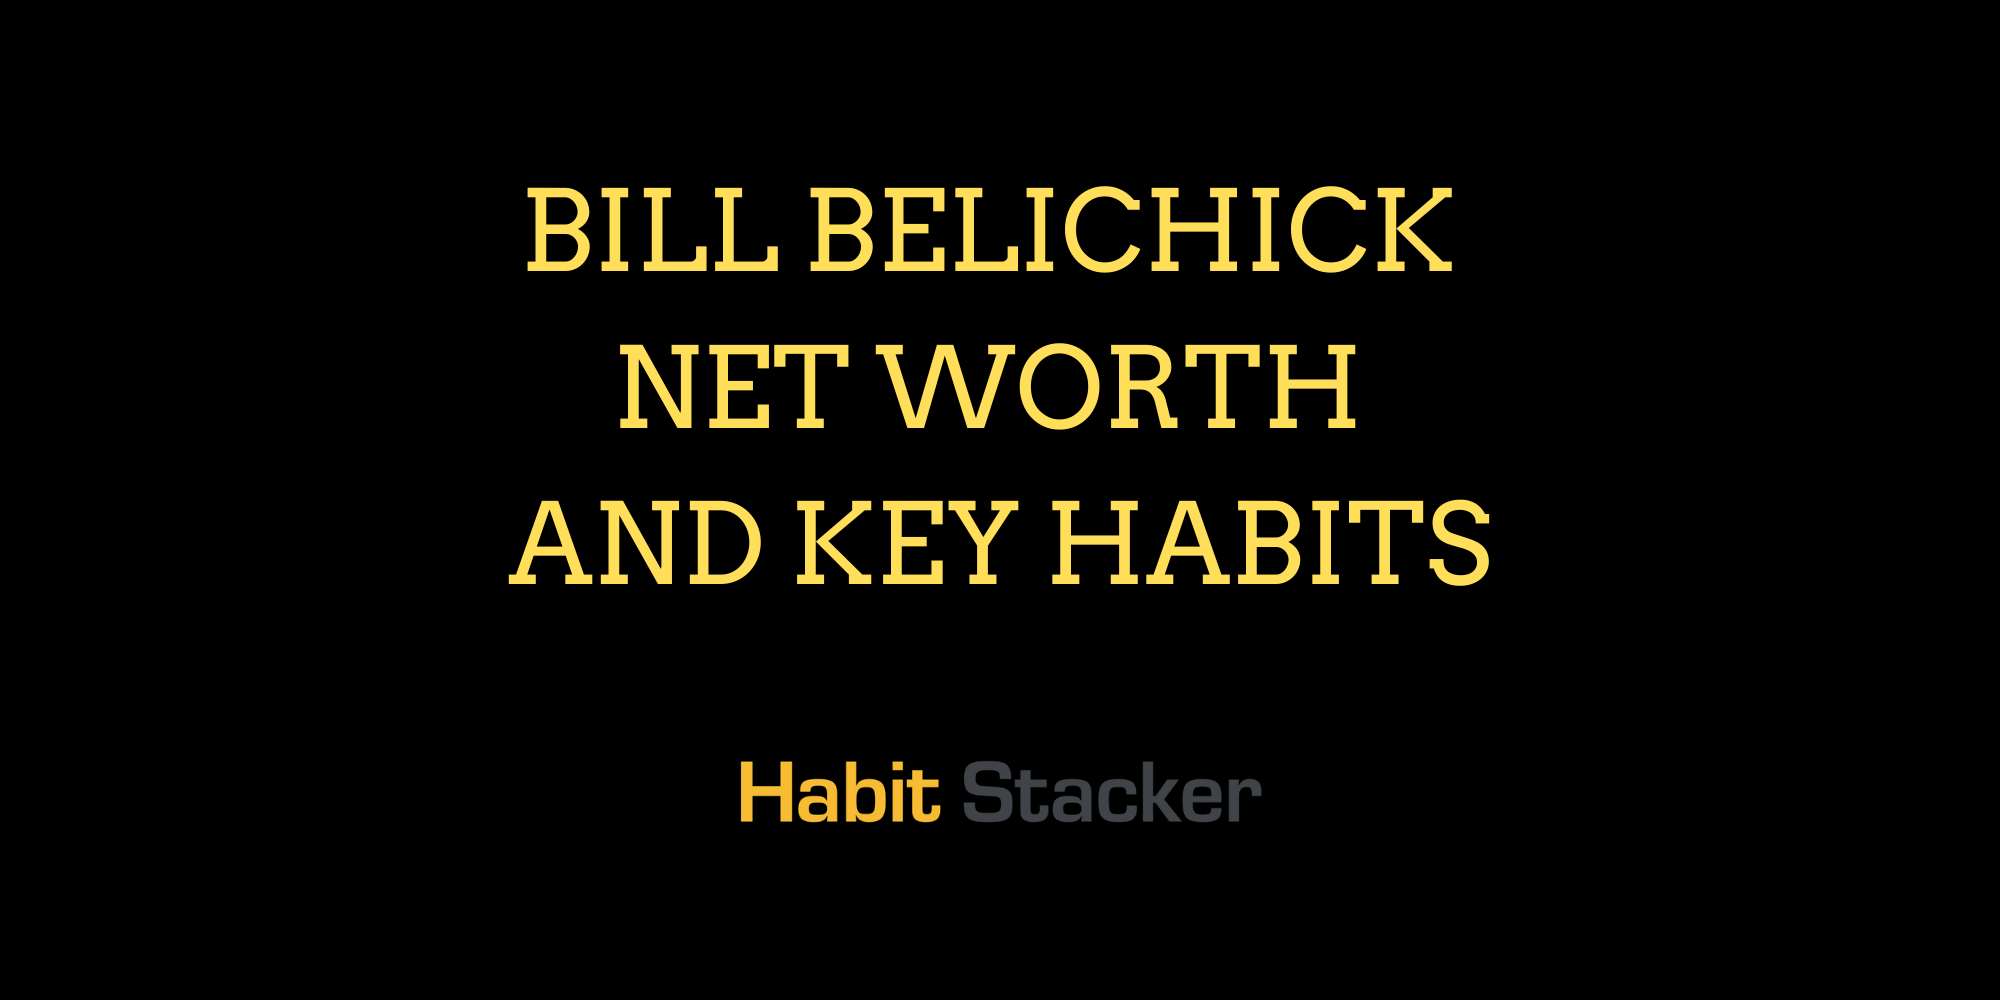 Bill Belichick Net Worth and Key Habits